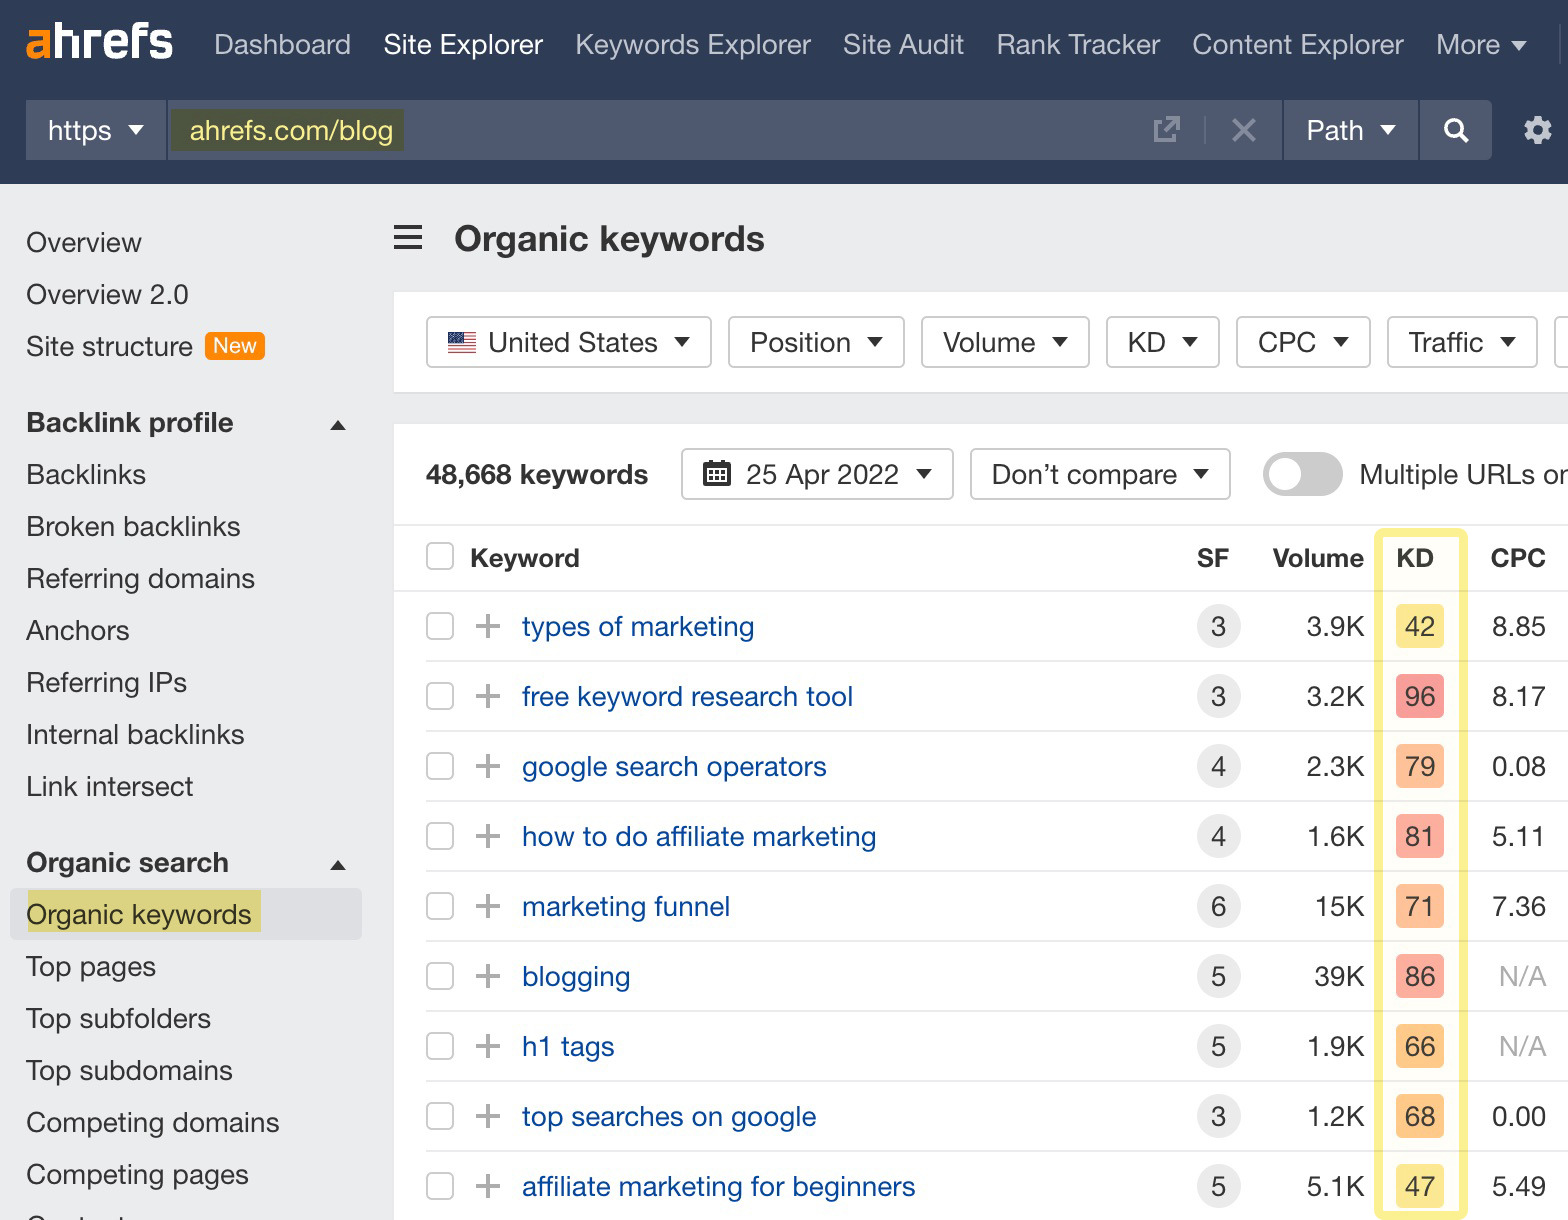 Organic keywords report for Ahrefs' blog showing KD scores of keywords  